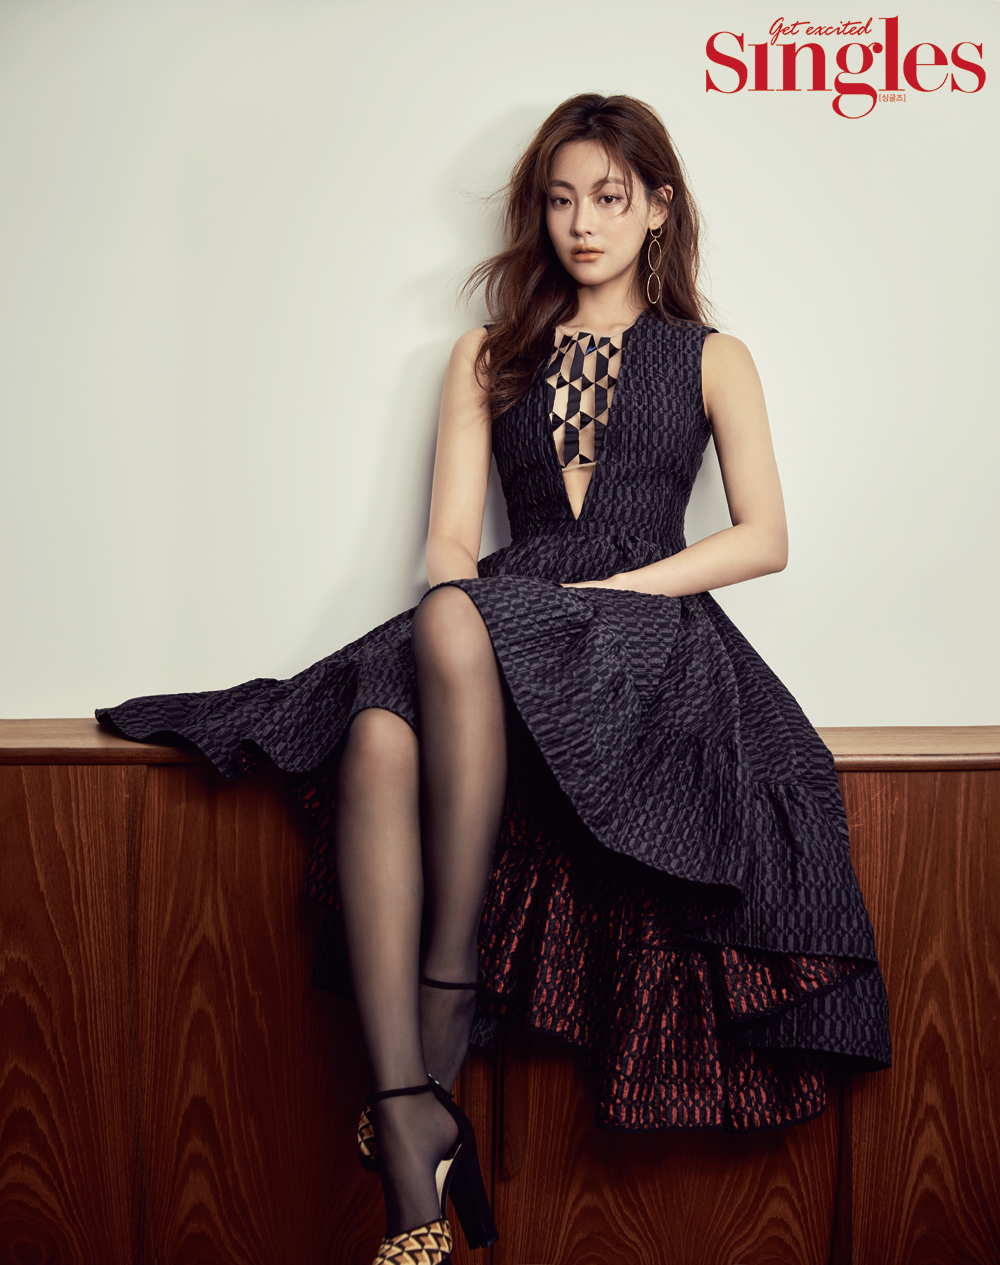 twenty2 blog: Oh Yeon Seo in Singles September 2017 | Fashion and Beauty